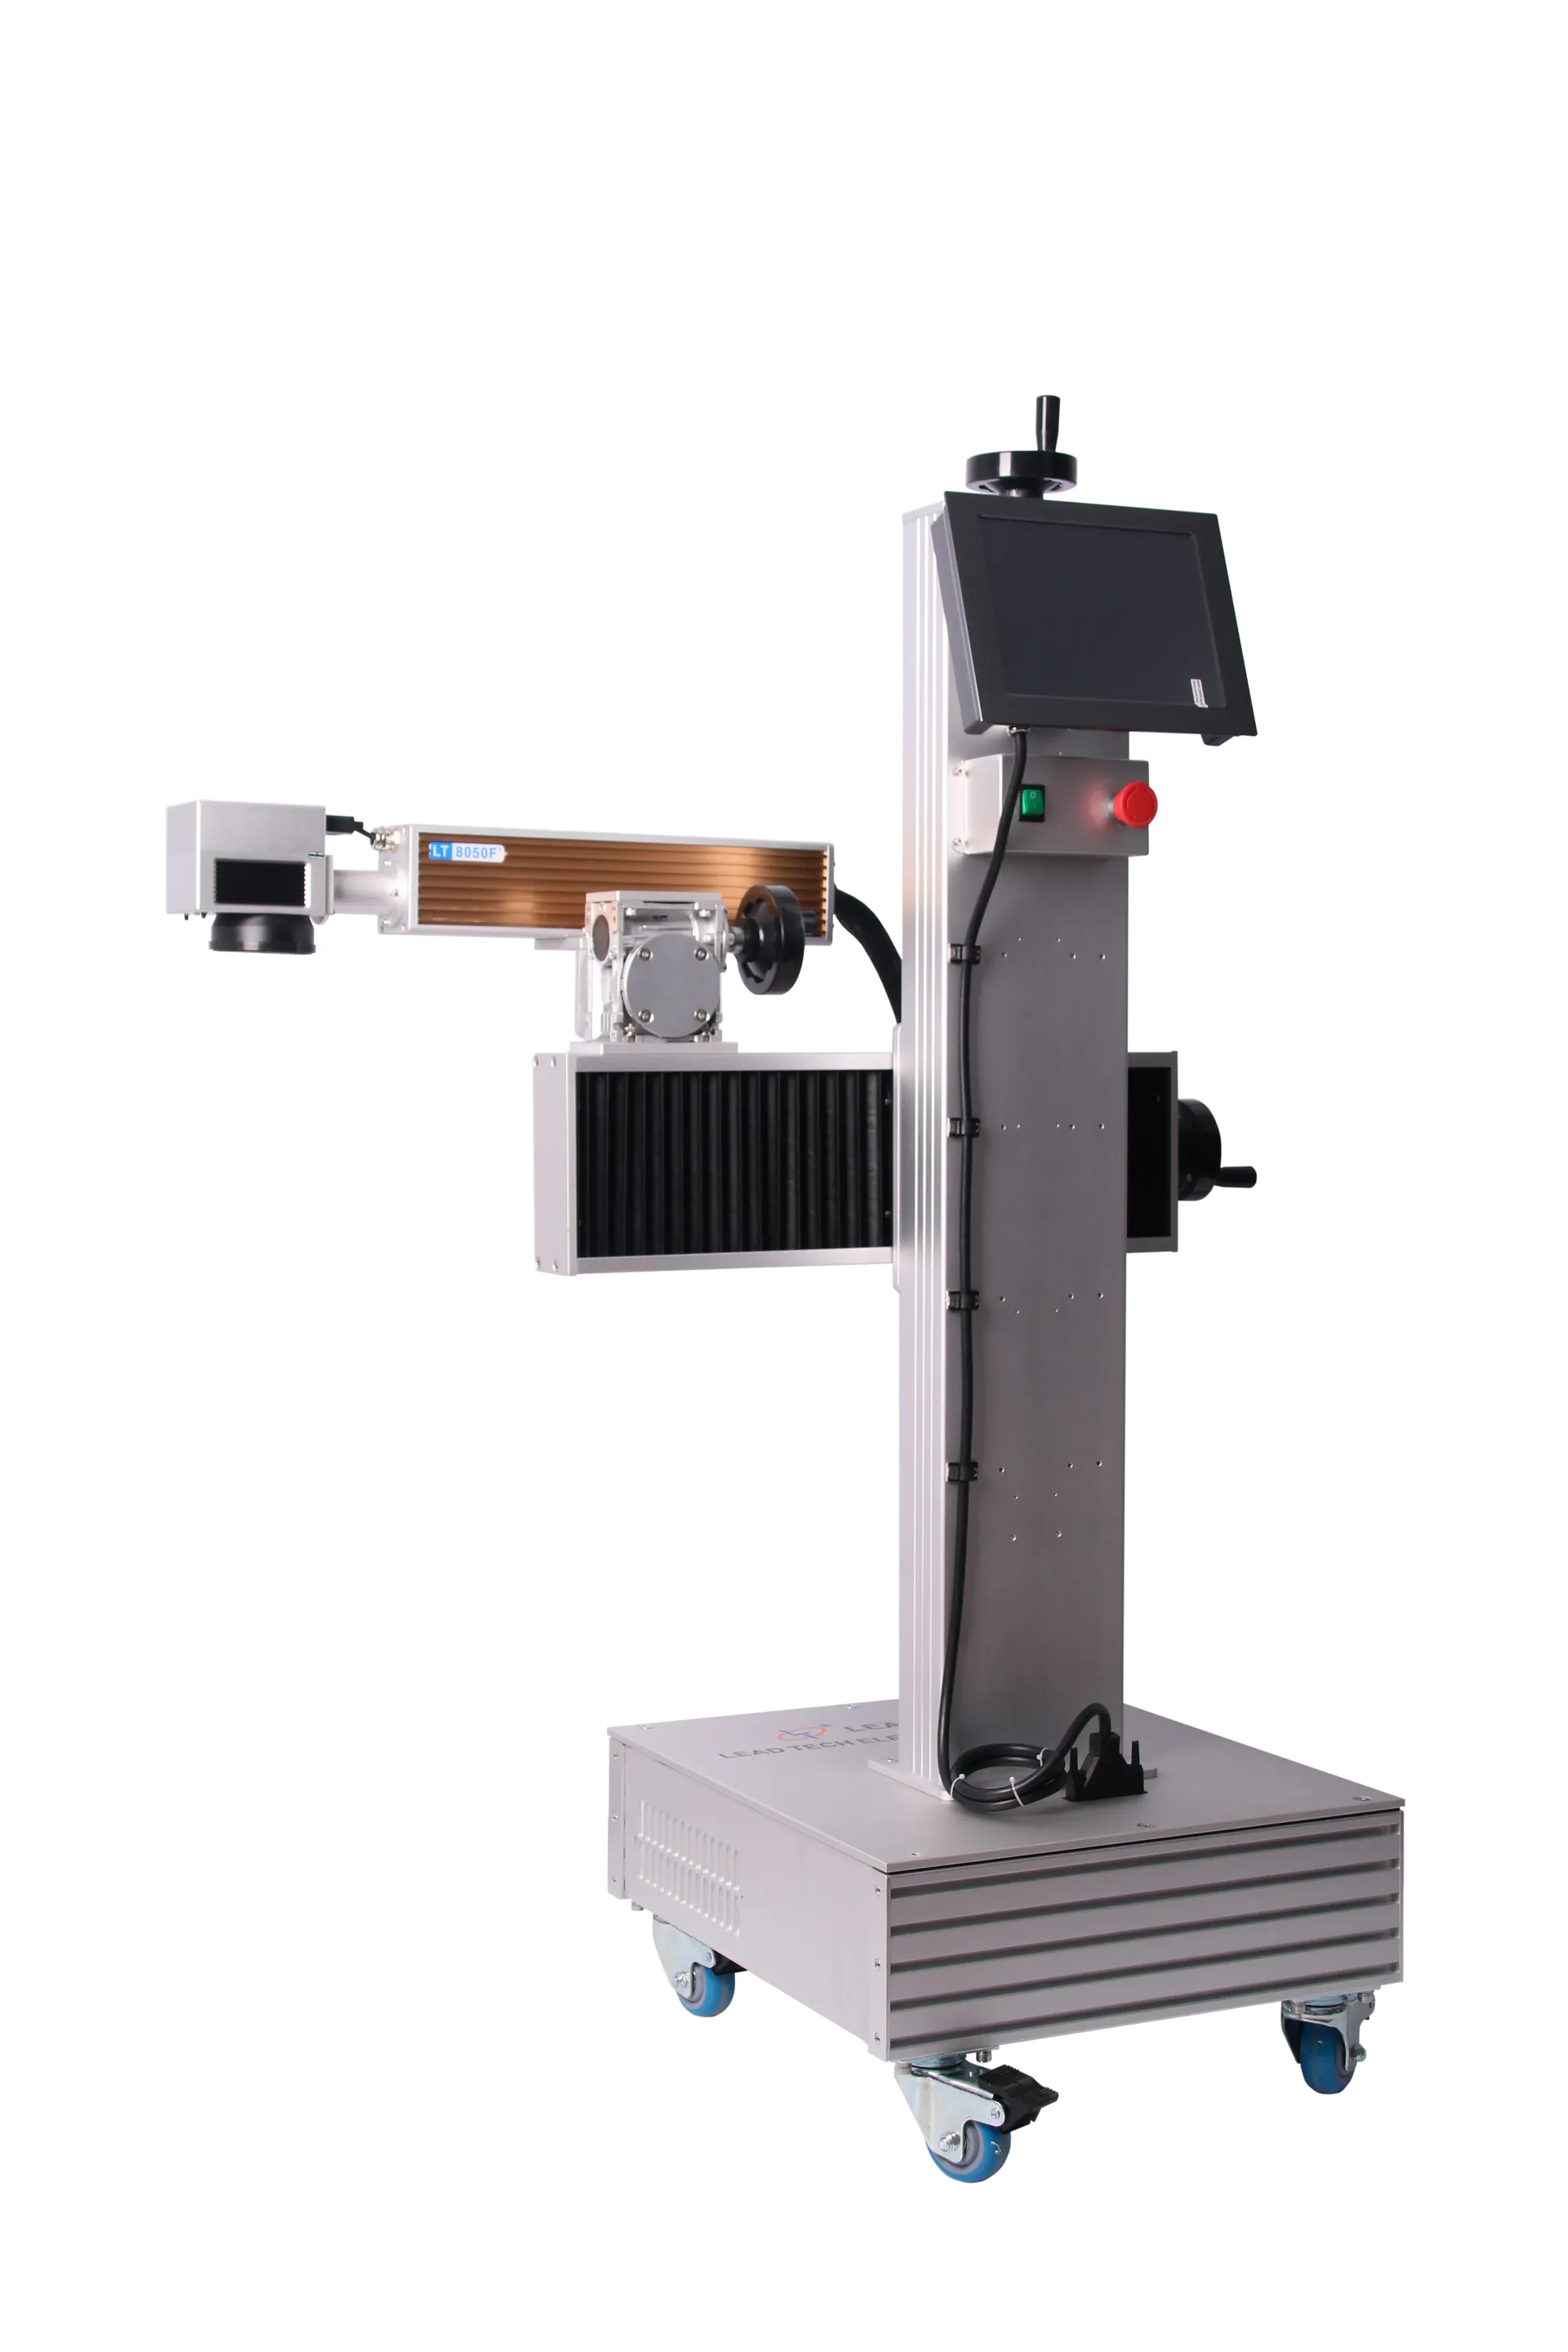 Lead Tech Lt8020f/Lt8030f/Lt8050f Fiber Digital Laser Marking Printer for Plate Silver Gold Printing